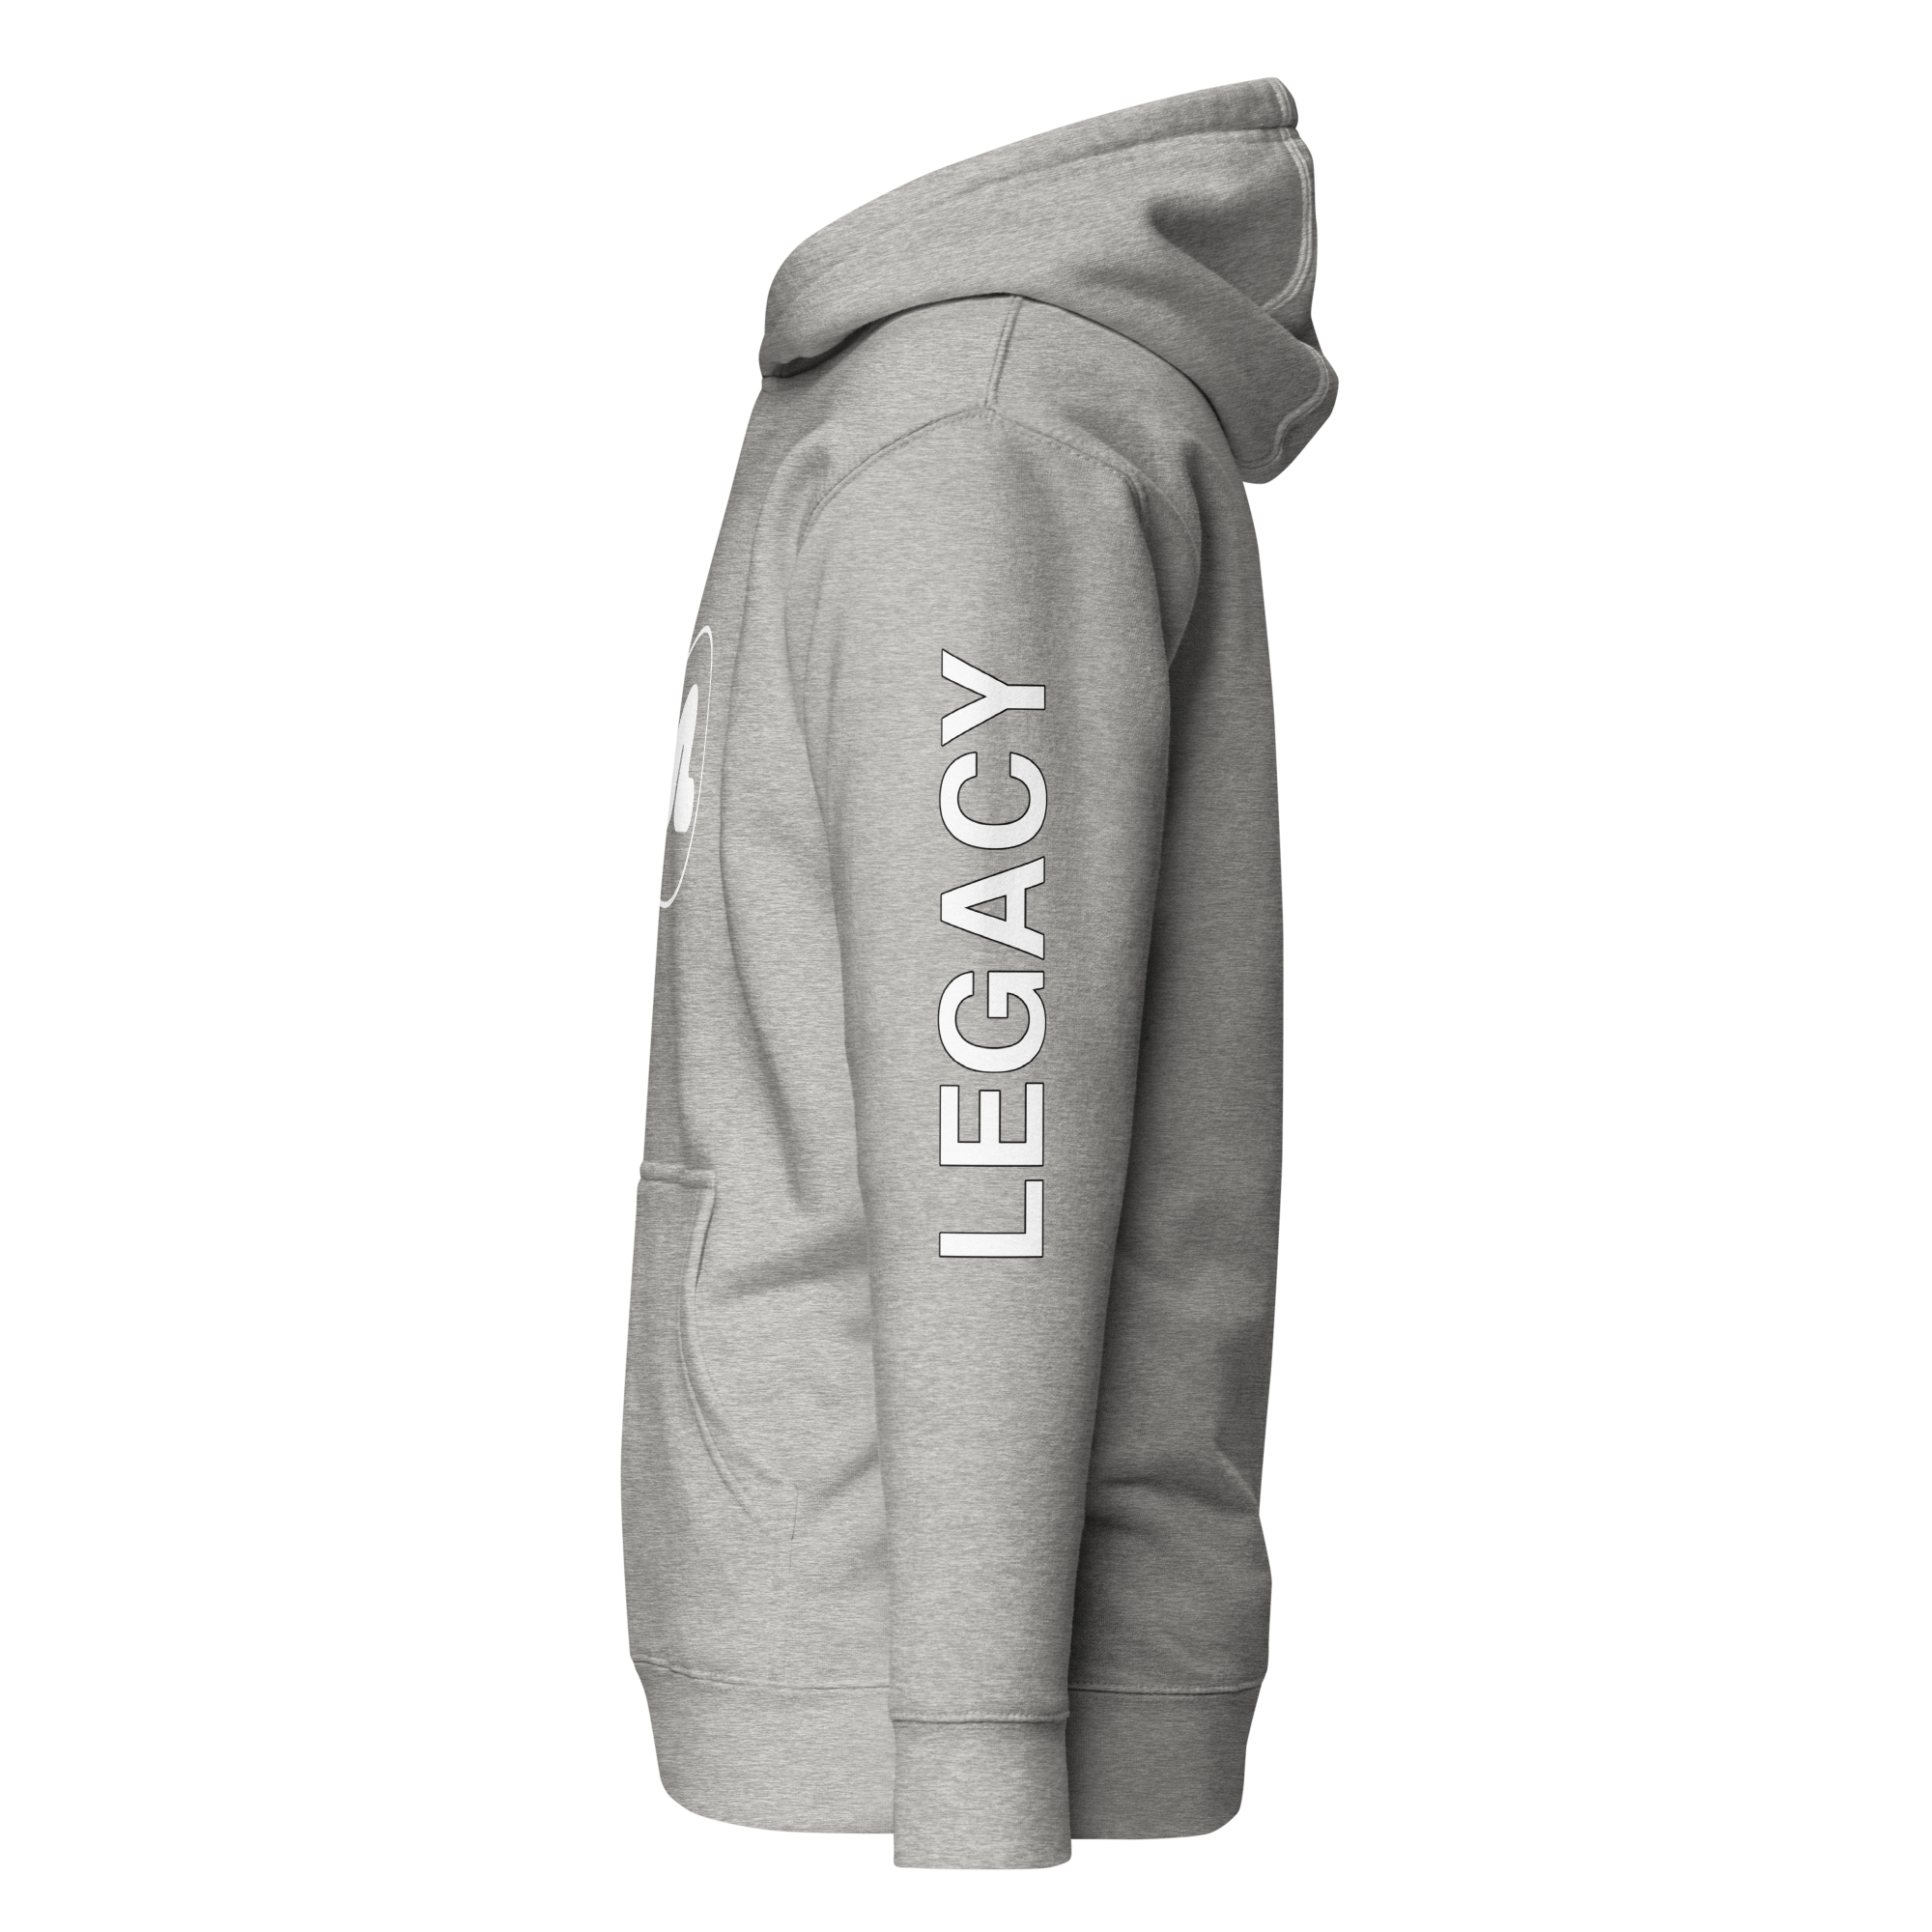 Legacy Prezi hoodie carbon grey and white.